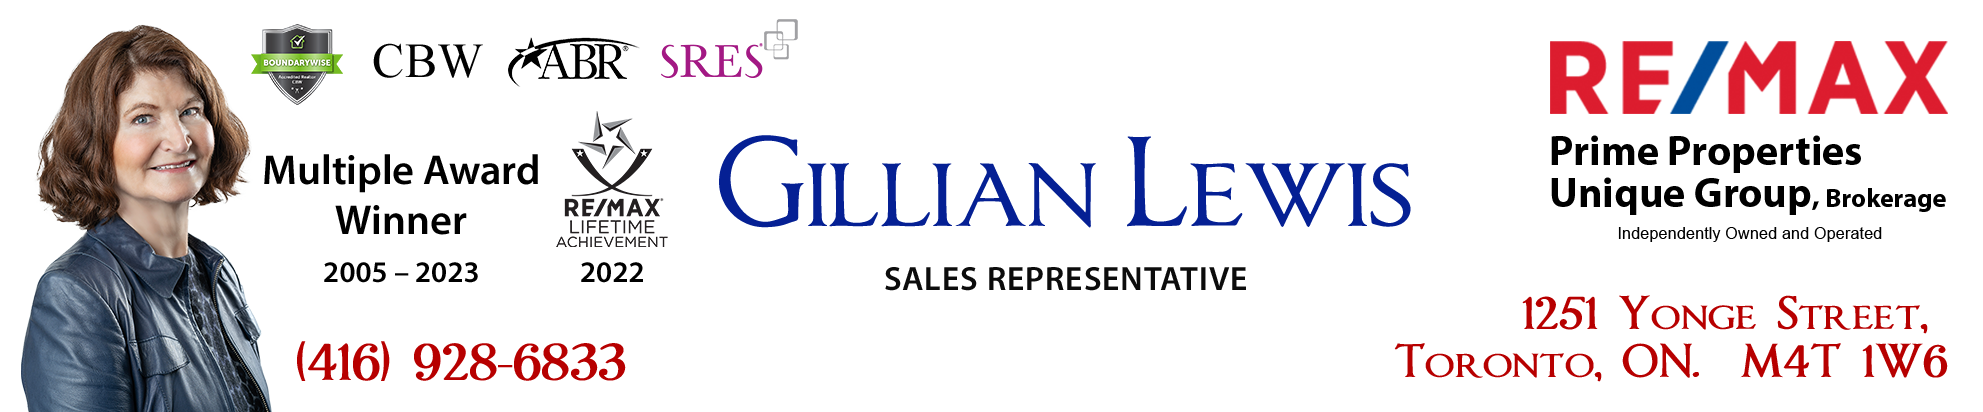 Gillian Lewis Graphic Header